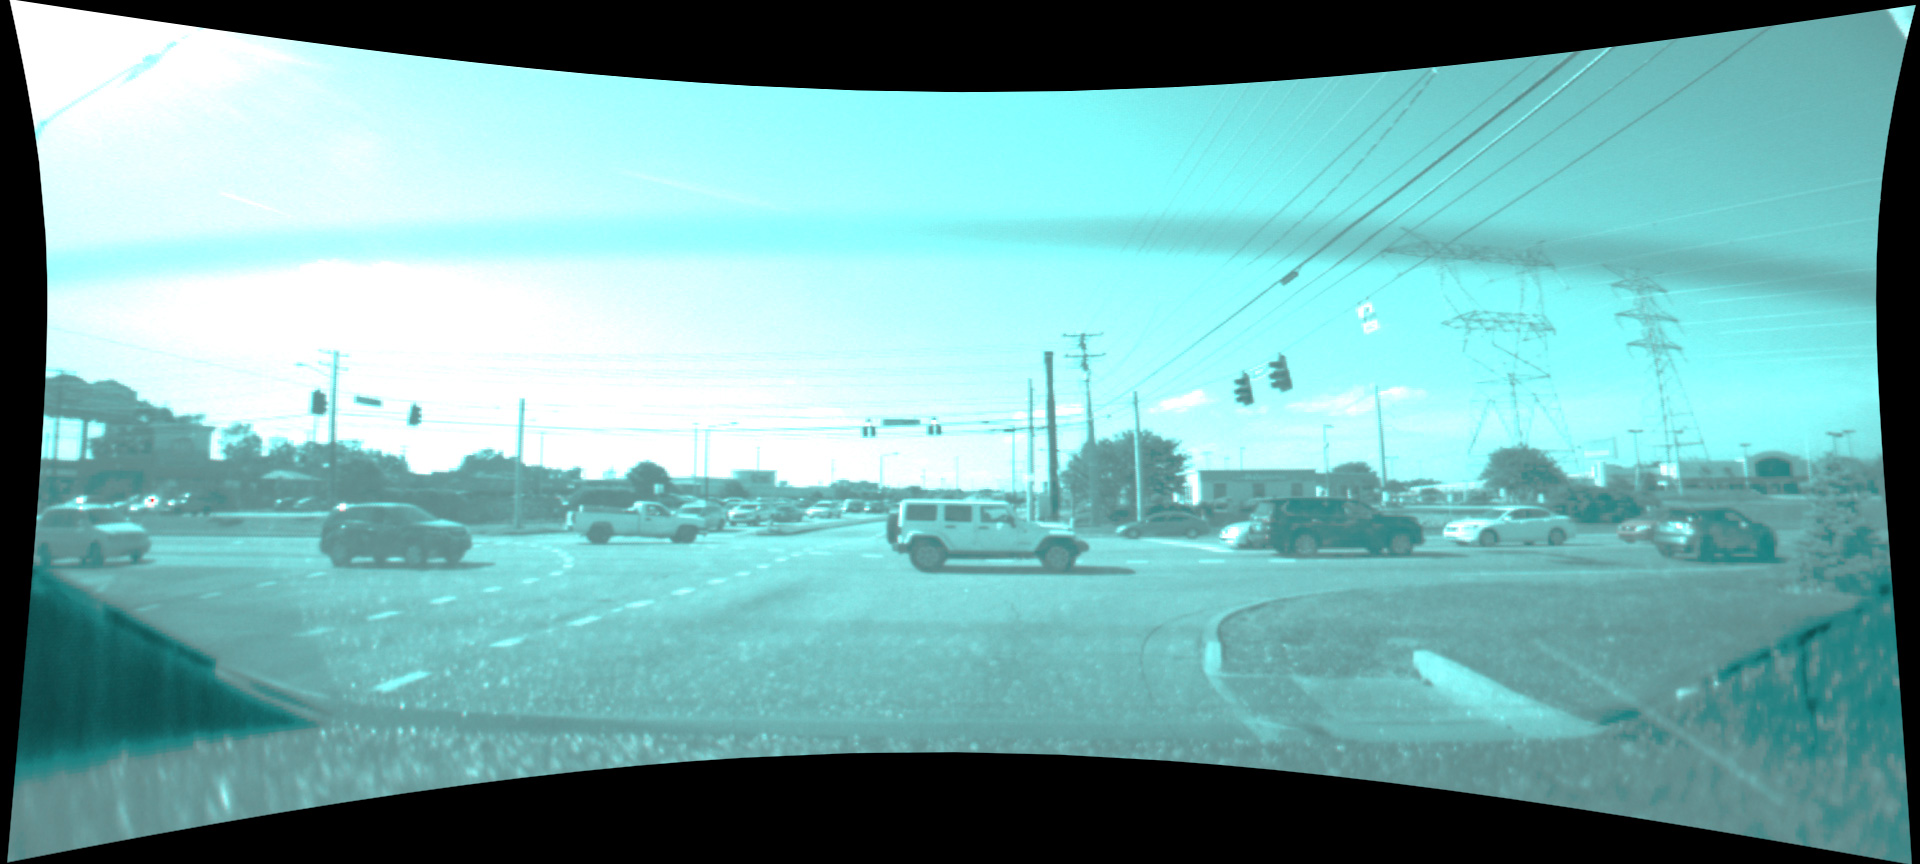 tcd3_traffic_lights_rgb_with_red_channel_warped.jpg